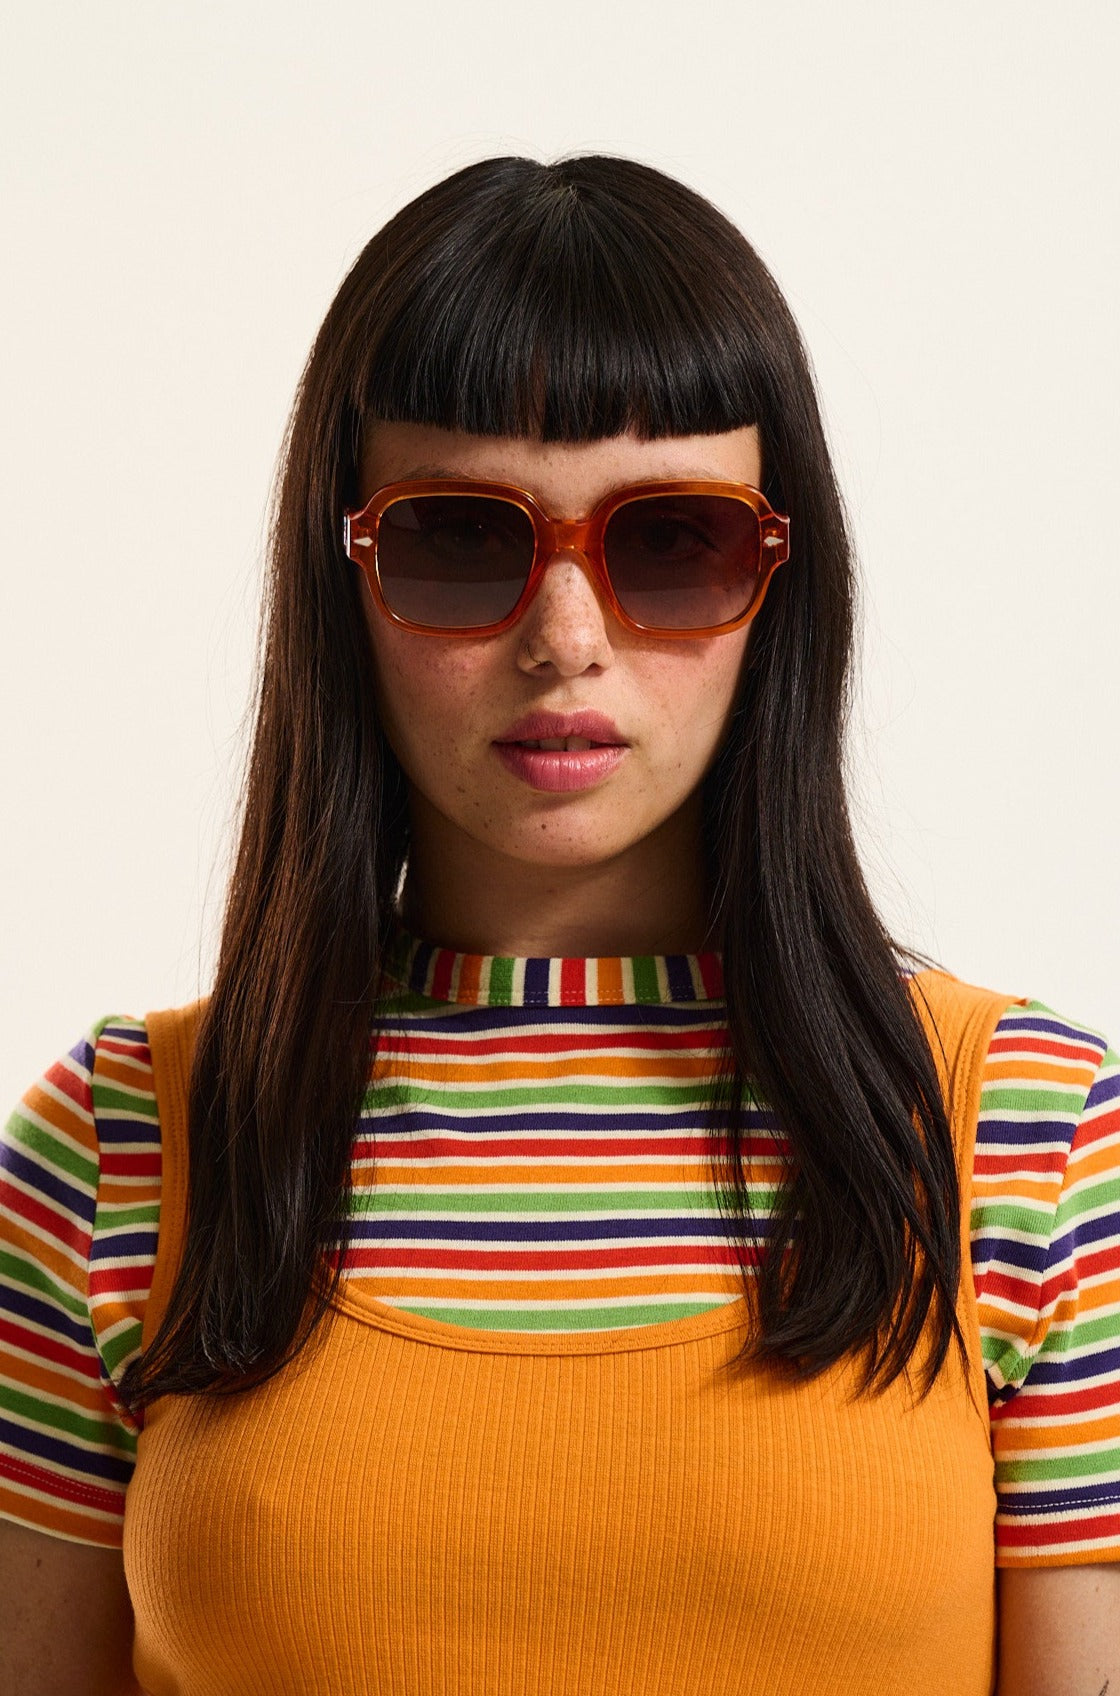 Pala X Lucy & Yak: Haiba Sunglasses - Flame Orange